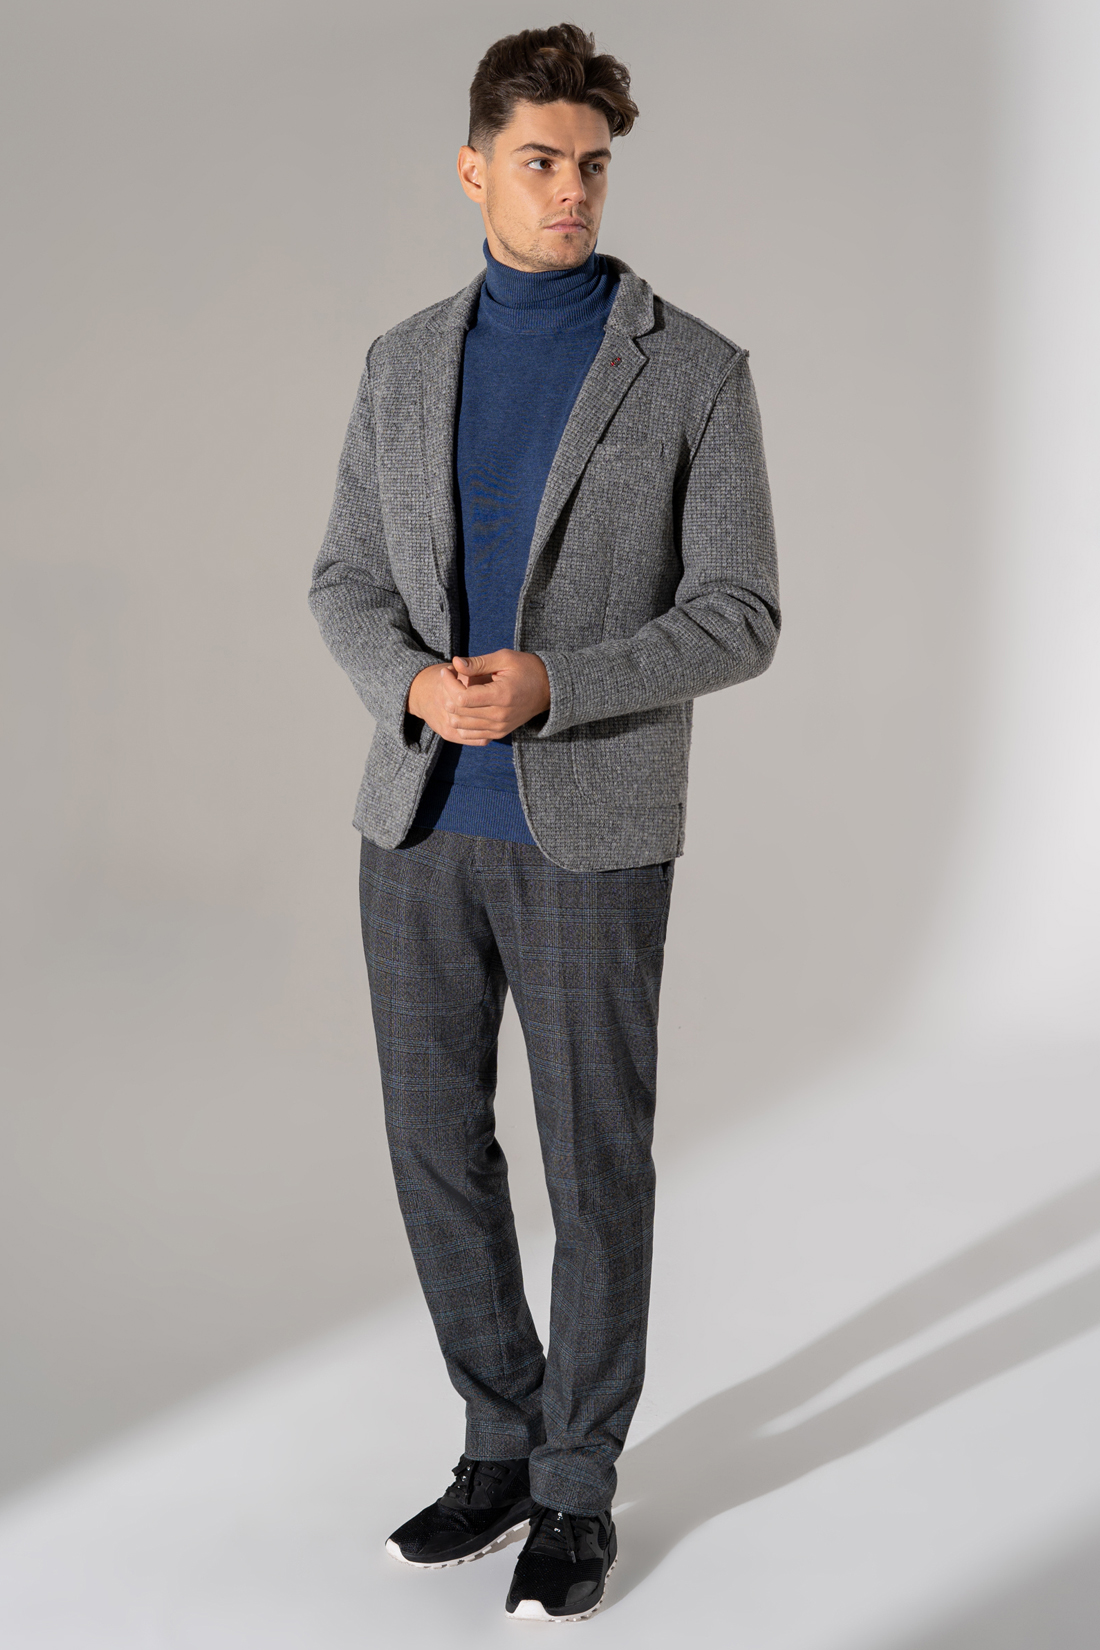 Серый пиджак с шерстью (арт. baon B629503), размер S, цвет deep grey melange#серый Серый пиджак с шерстью (арт. baon B629503) - фото 1